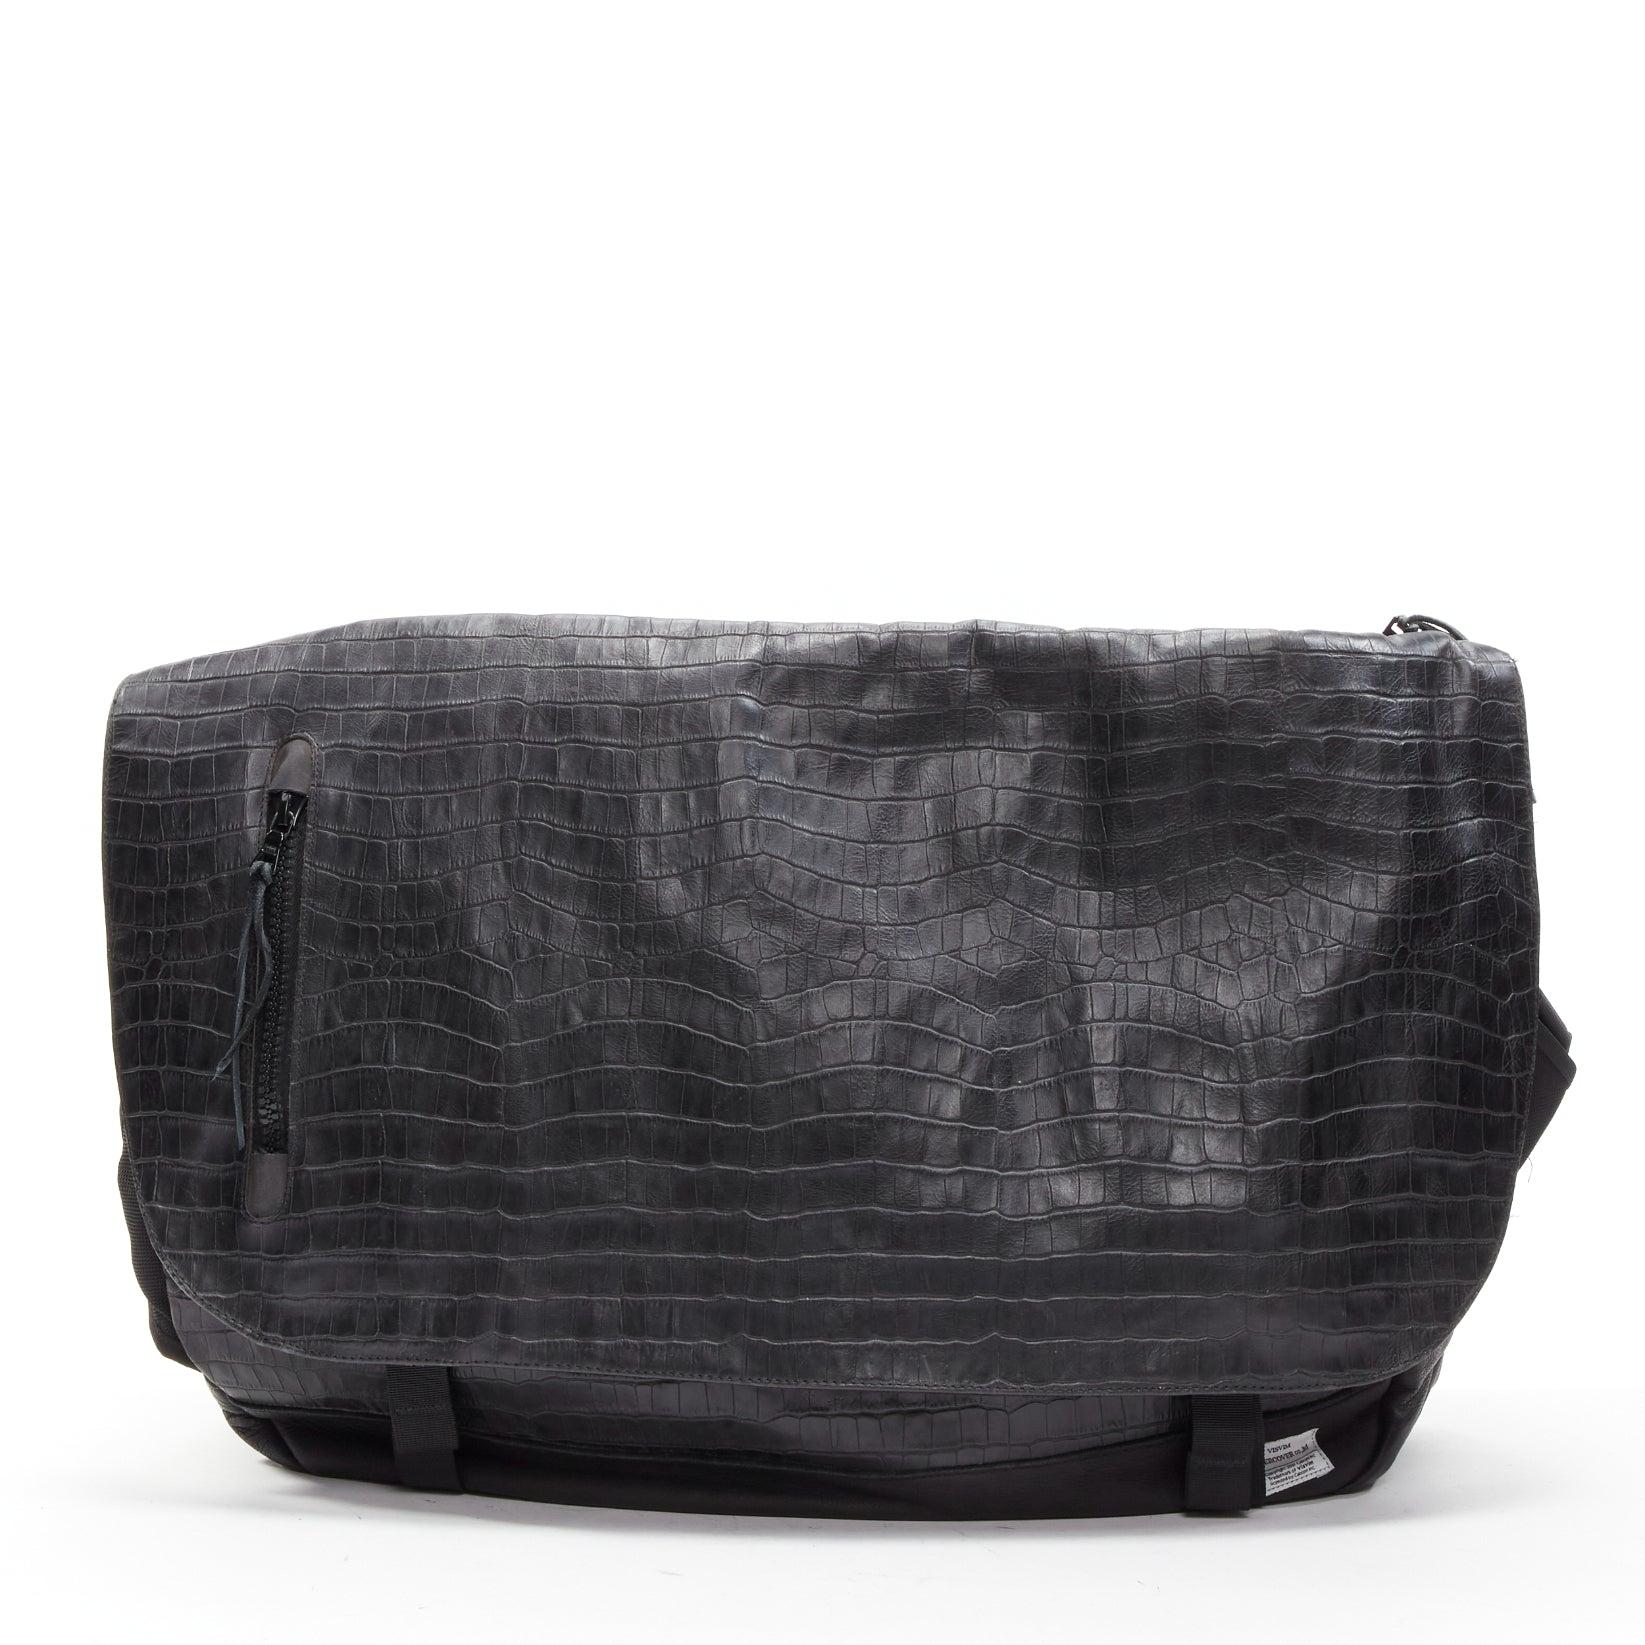 UNDERCOVER VISVIM 2007 Ballistic E-Cat black croc embossed oversized crossbody bag
Reference: CAWG/A00251
Brand: Undercover
Model: Ballistic E-Cat
Collection: Visvim 2007
Material: Leather, Fabric
Color: Black
Pattern: Animal Print
Closure: